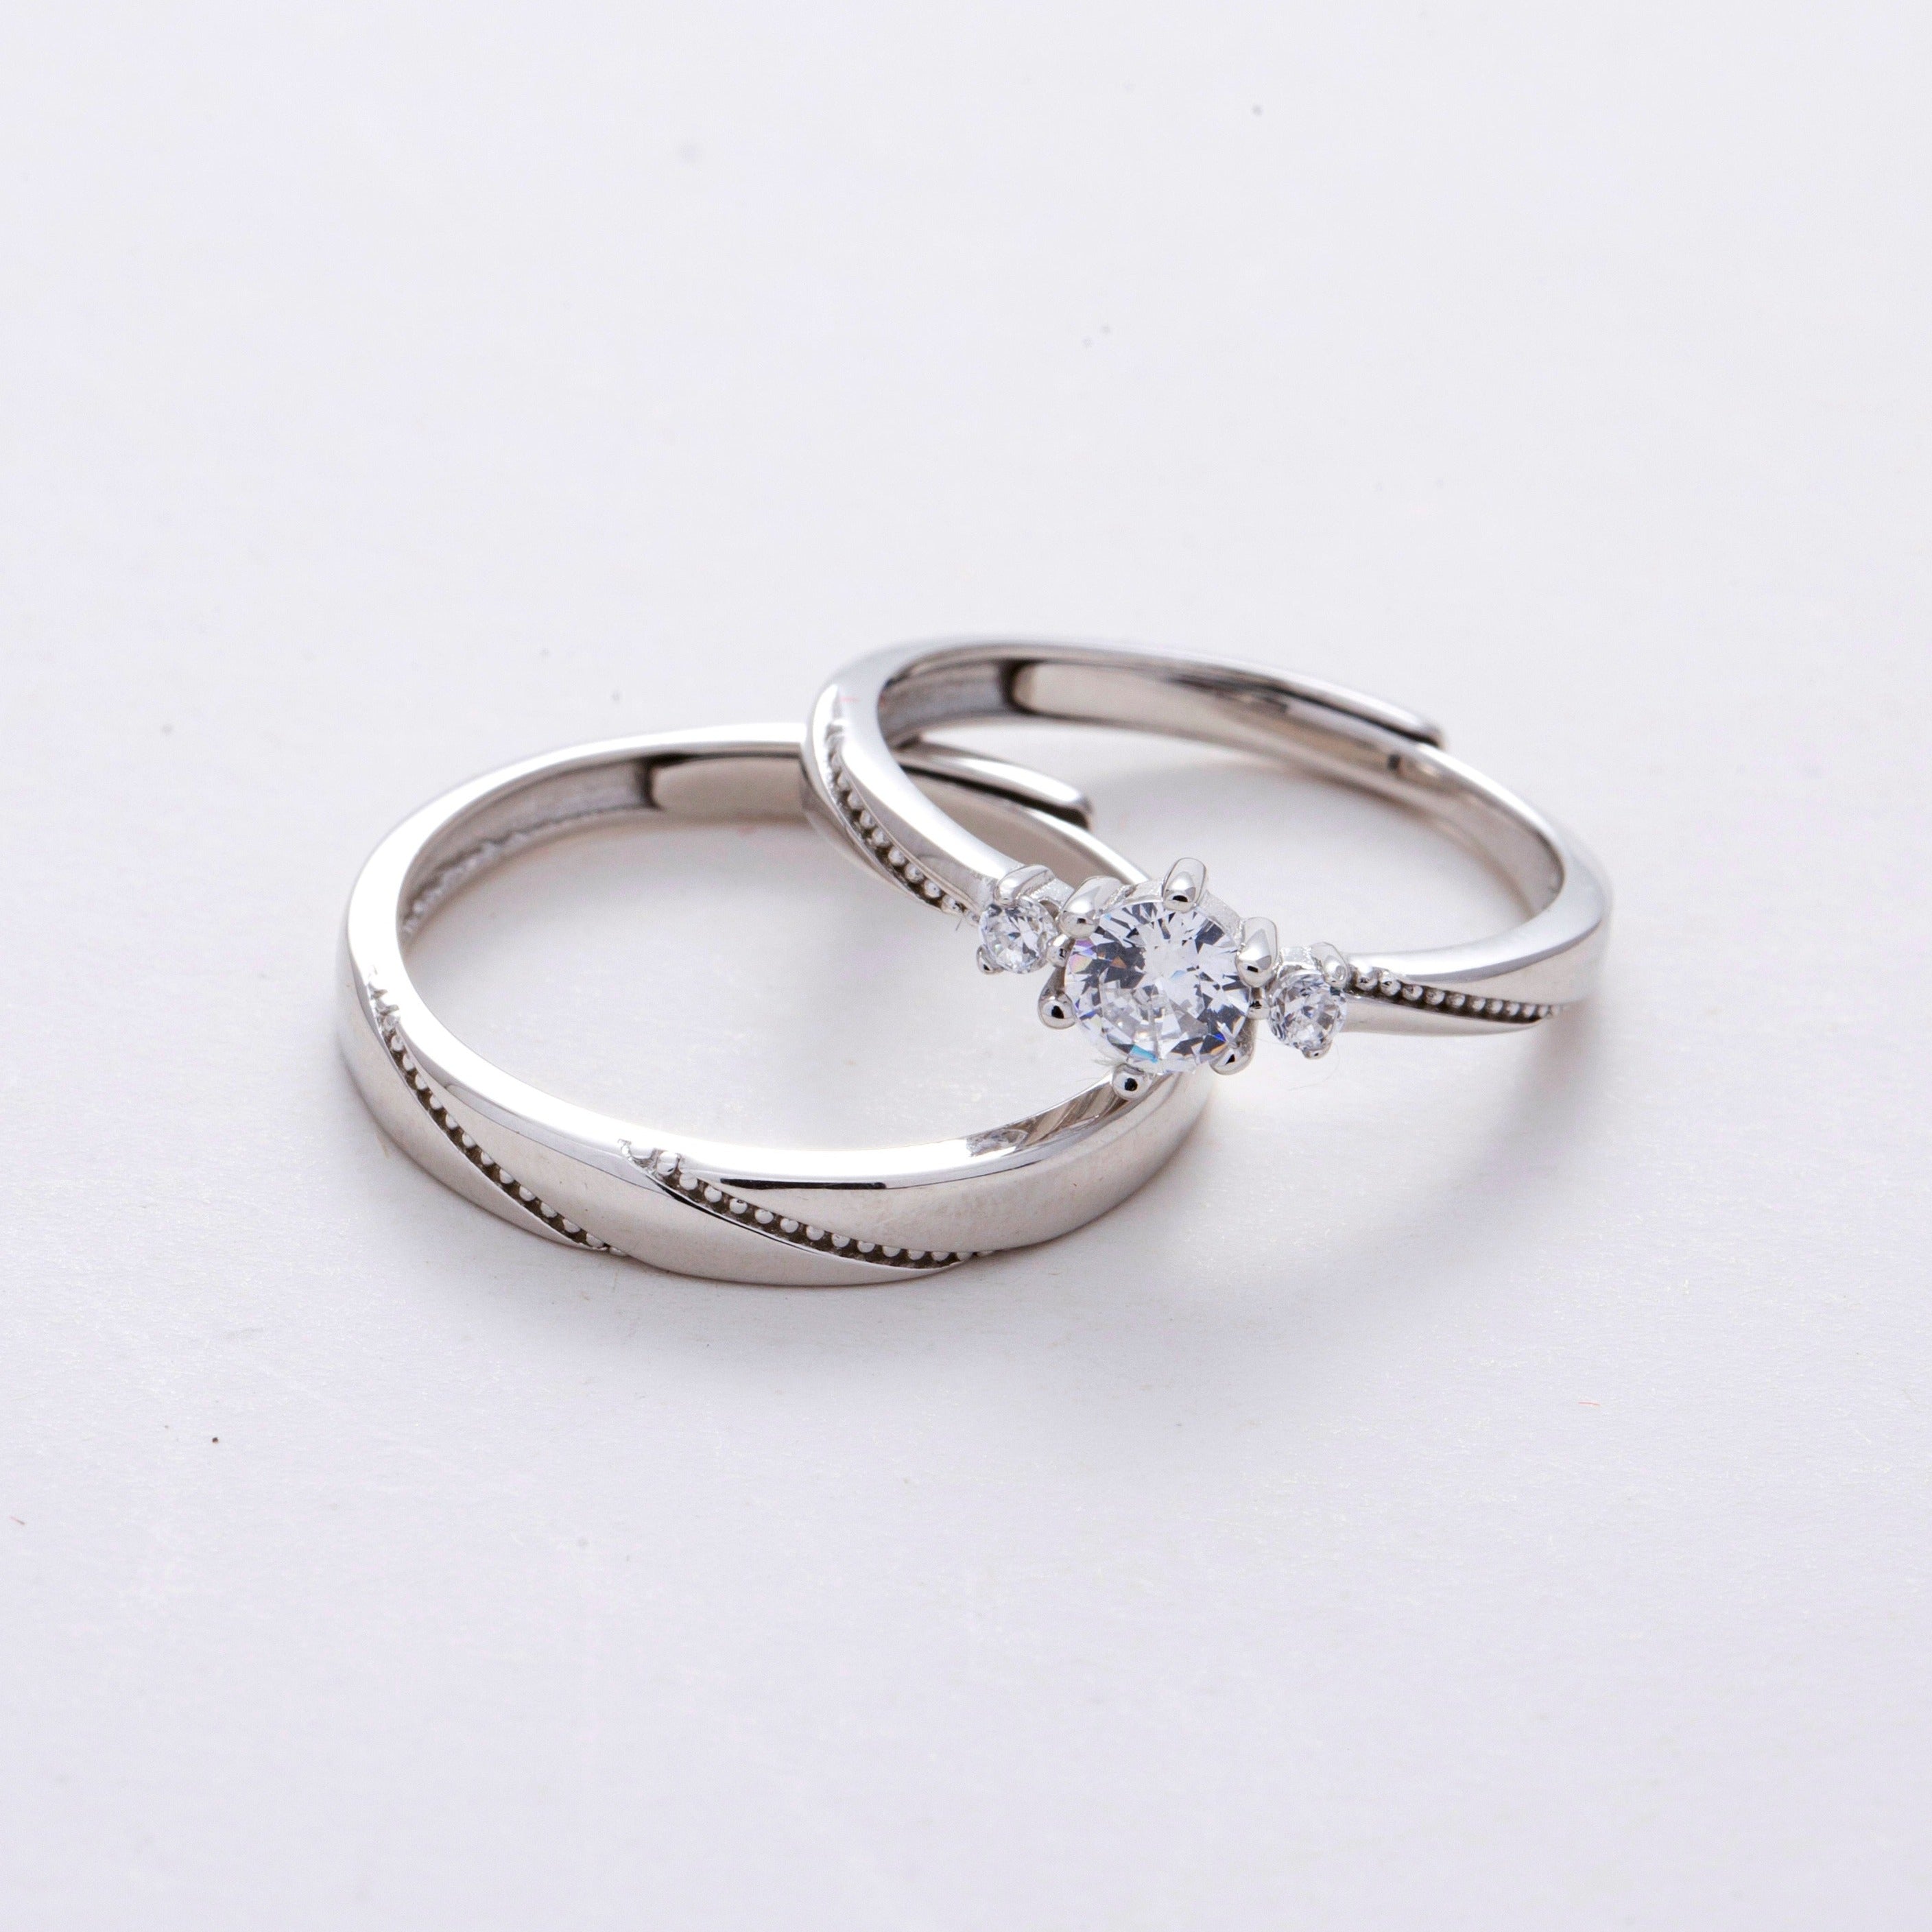 Heart Design Silver Couple Rings – jolics